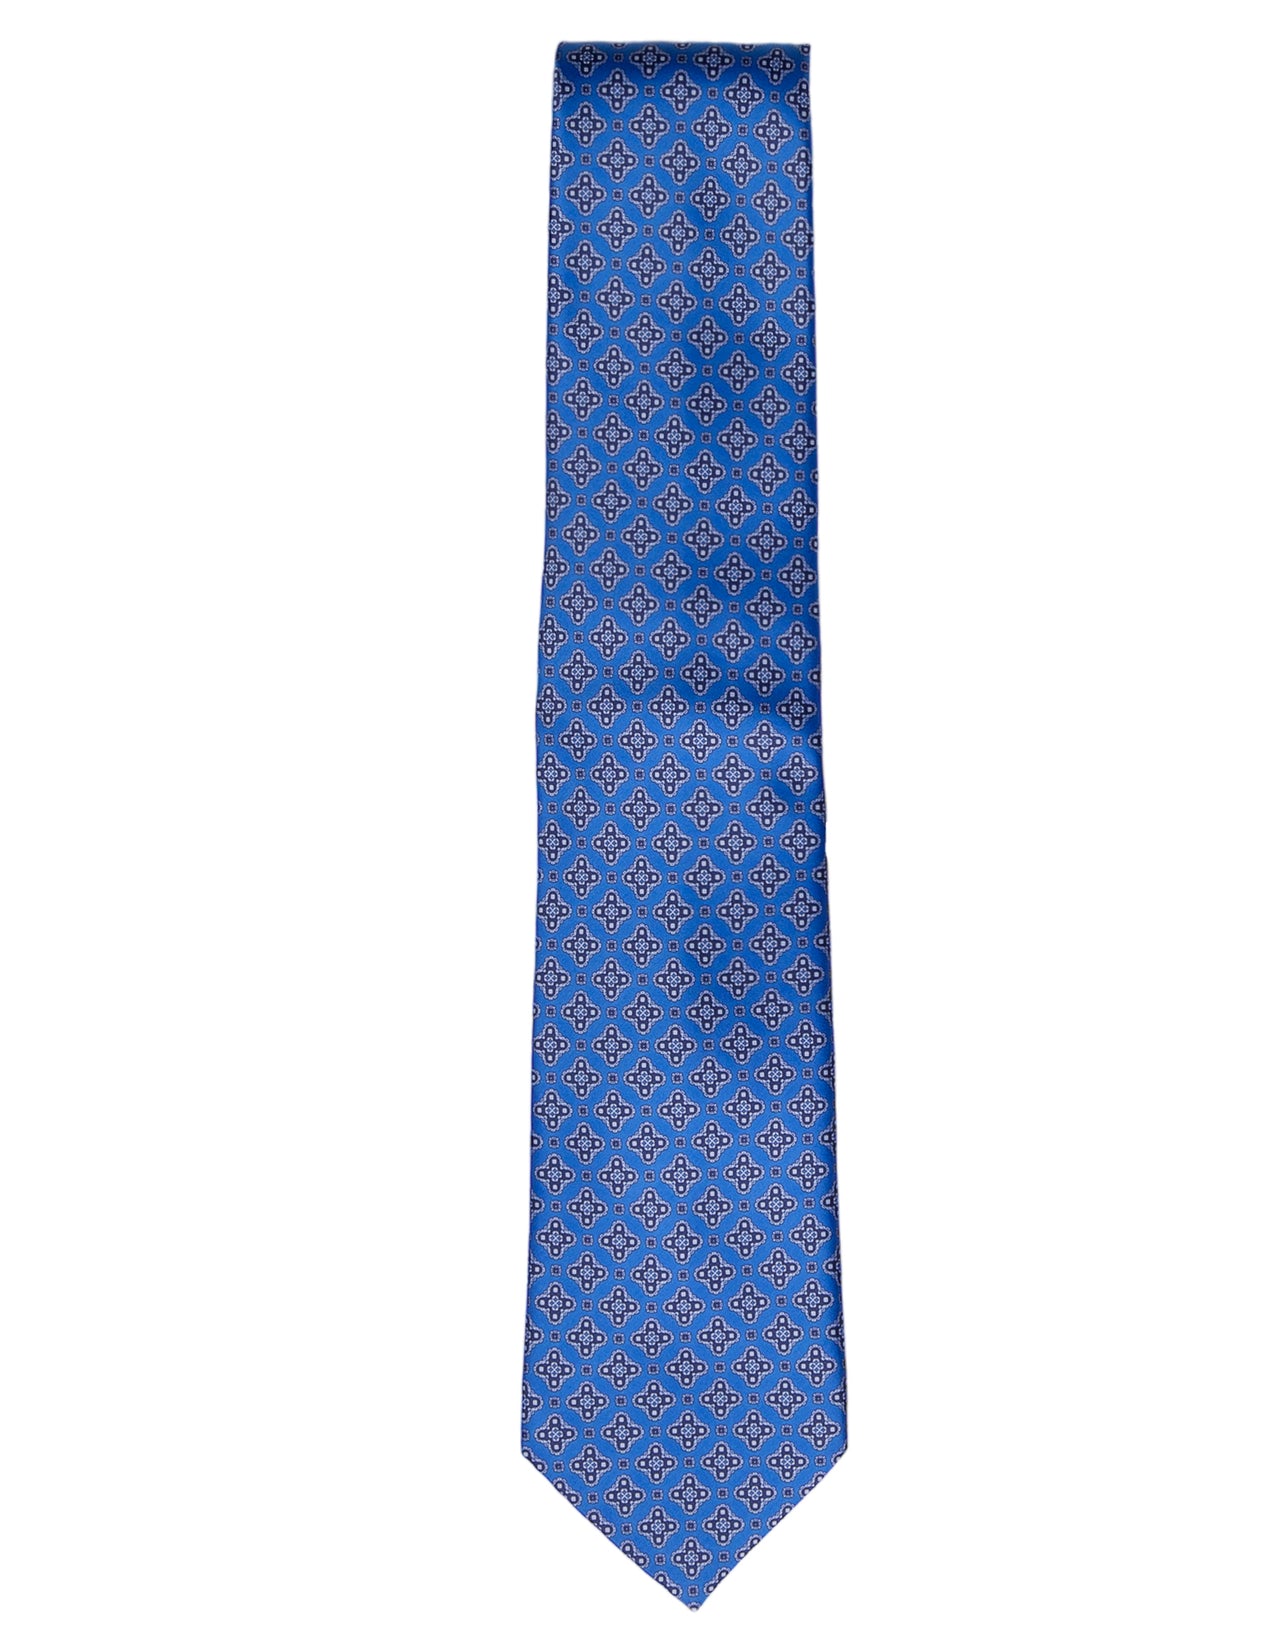 STEFANO RICCI Silk Tie & Pocket Square Set LIGHT BLUE/BLUE